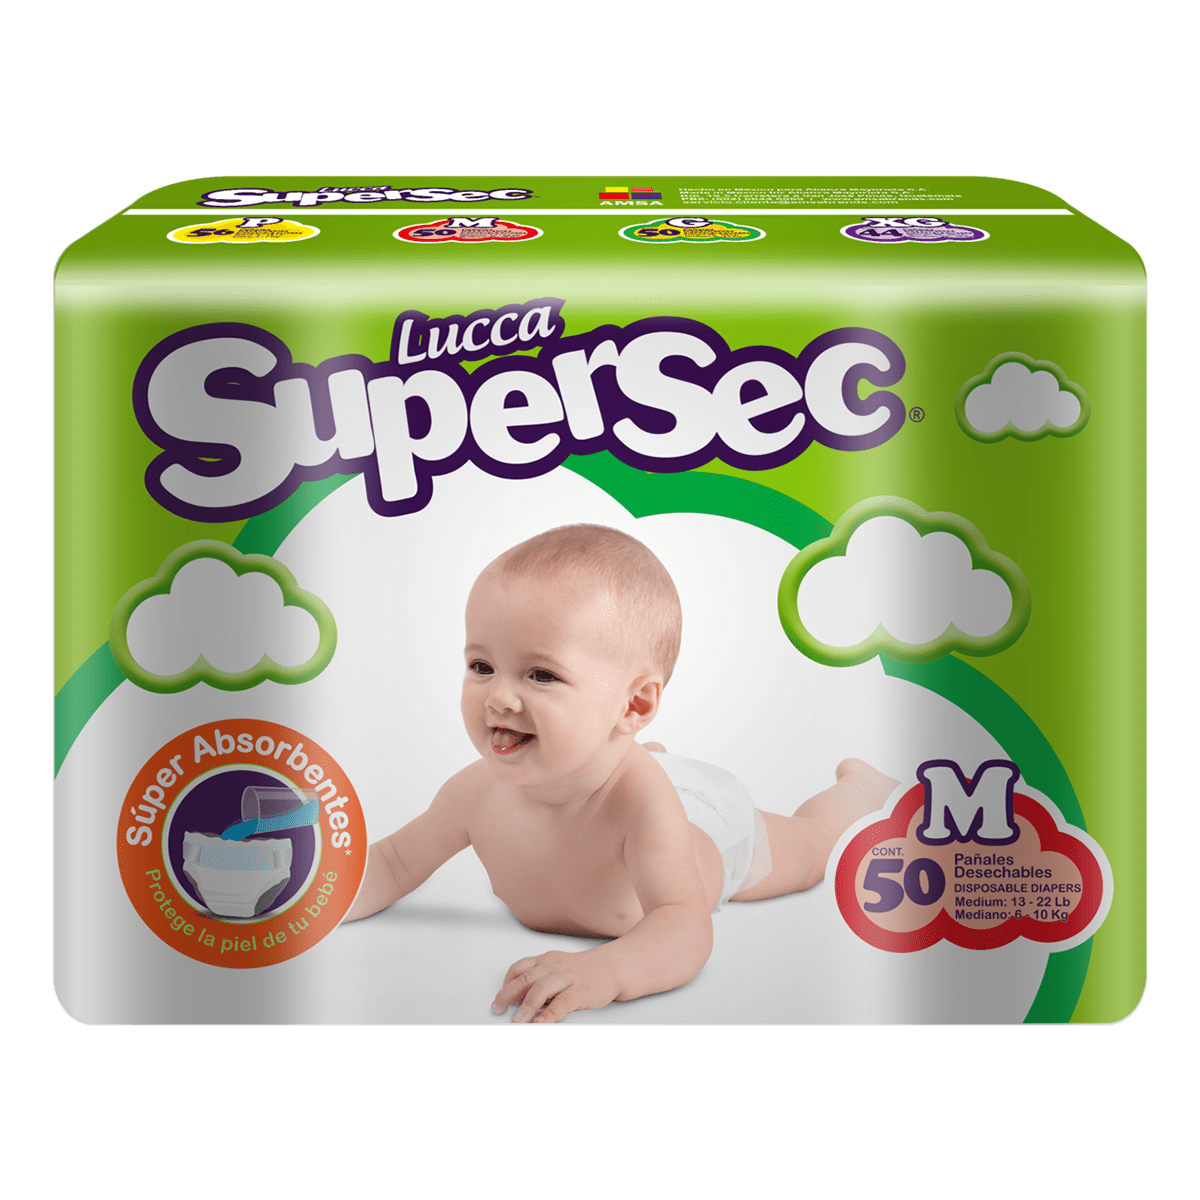 Lucca SuperSec Diapers<br> Medium (13 24 Lbs)